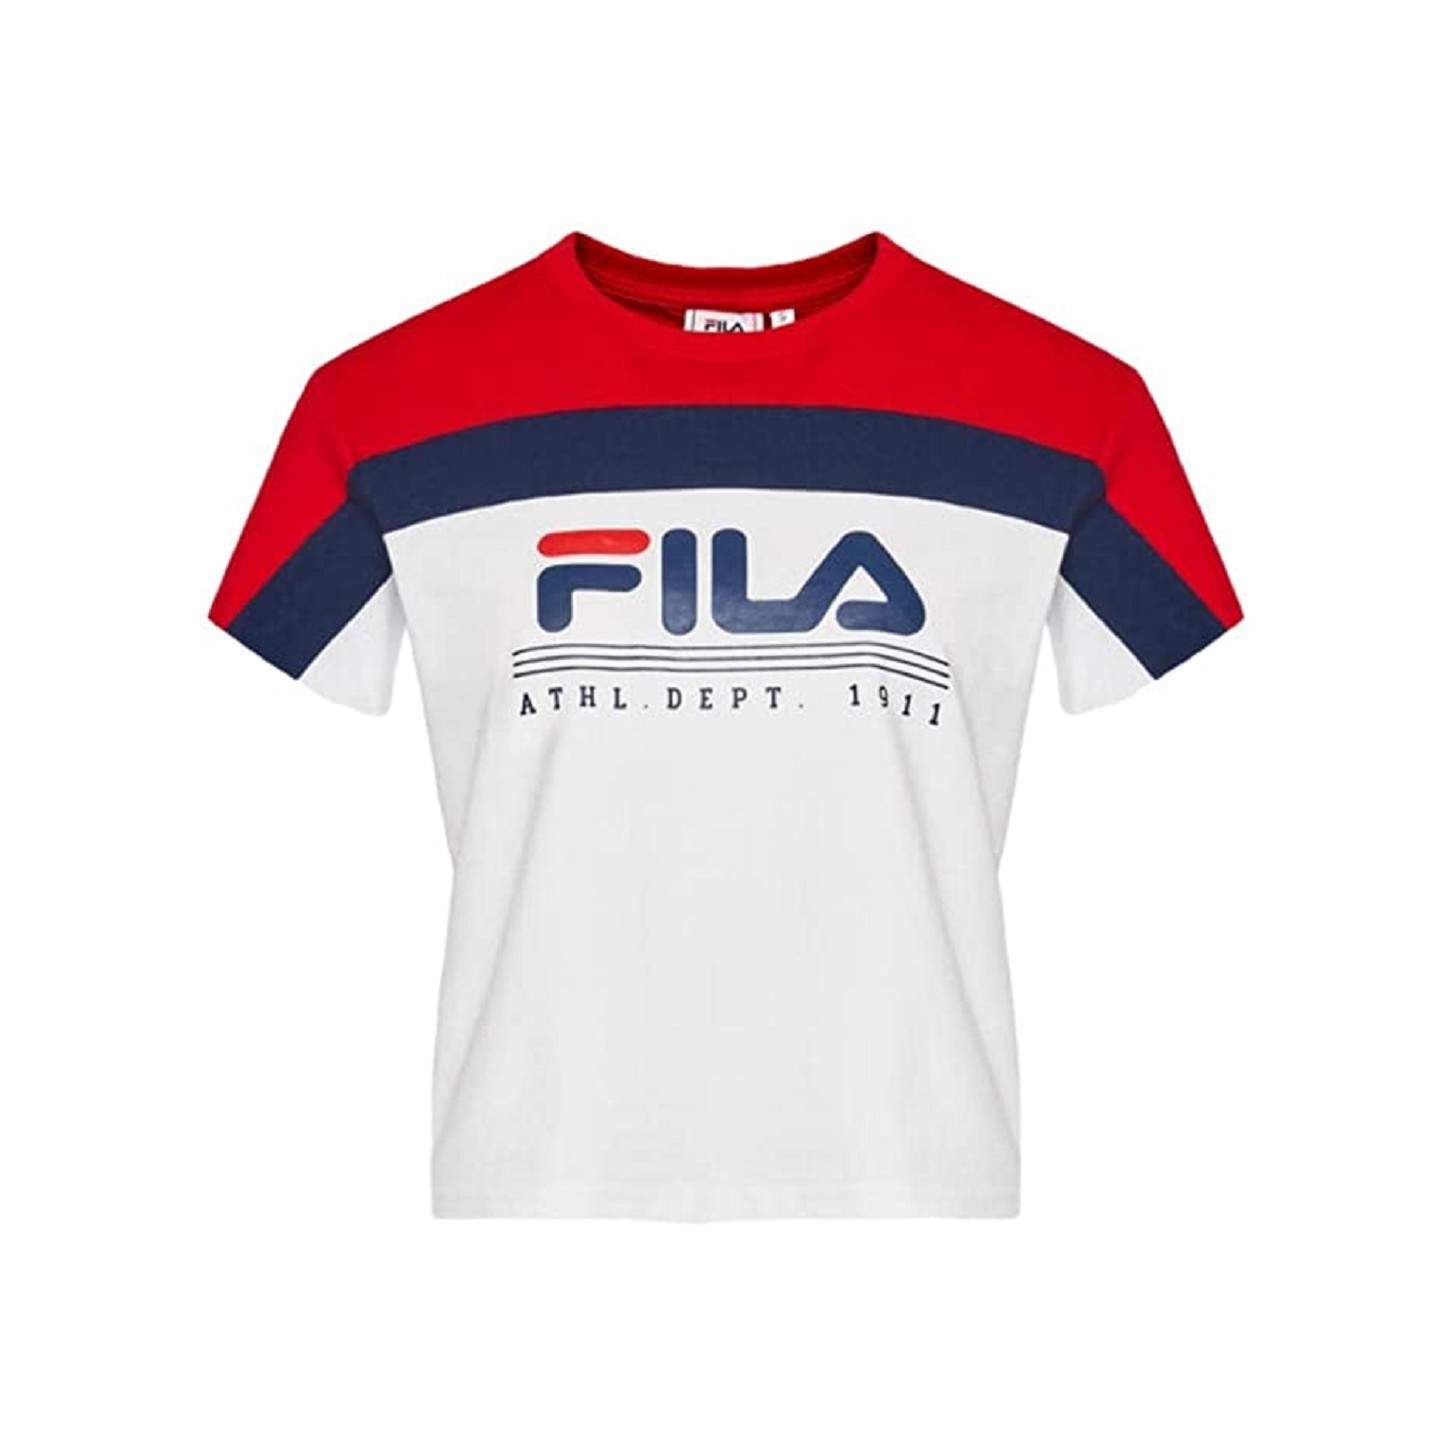 Camiseta corta Fila para mujer roja-azul-blanca - VertSport